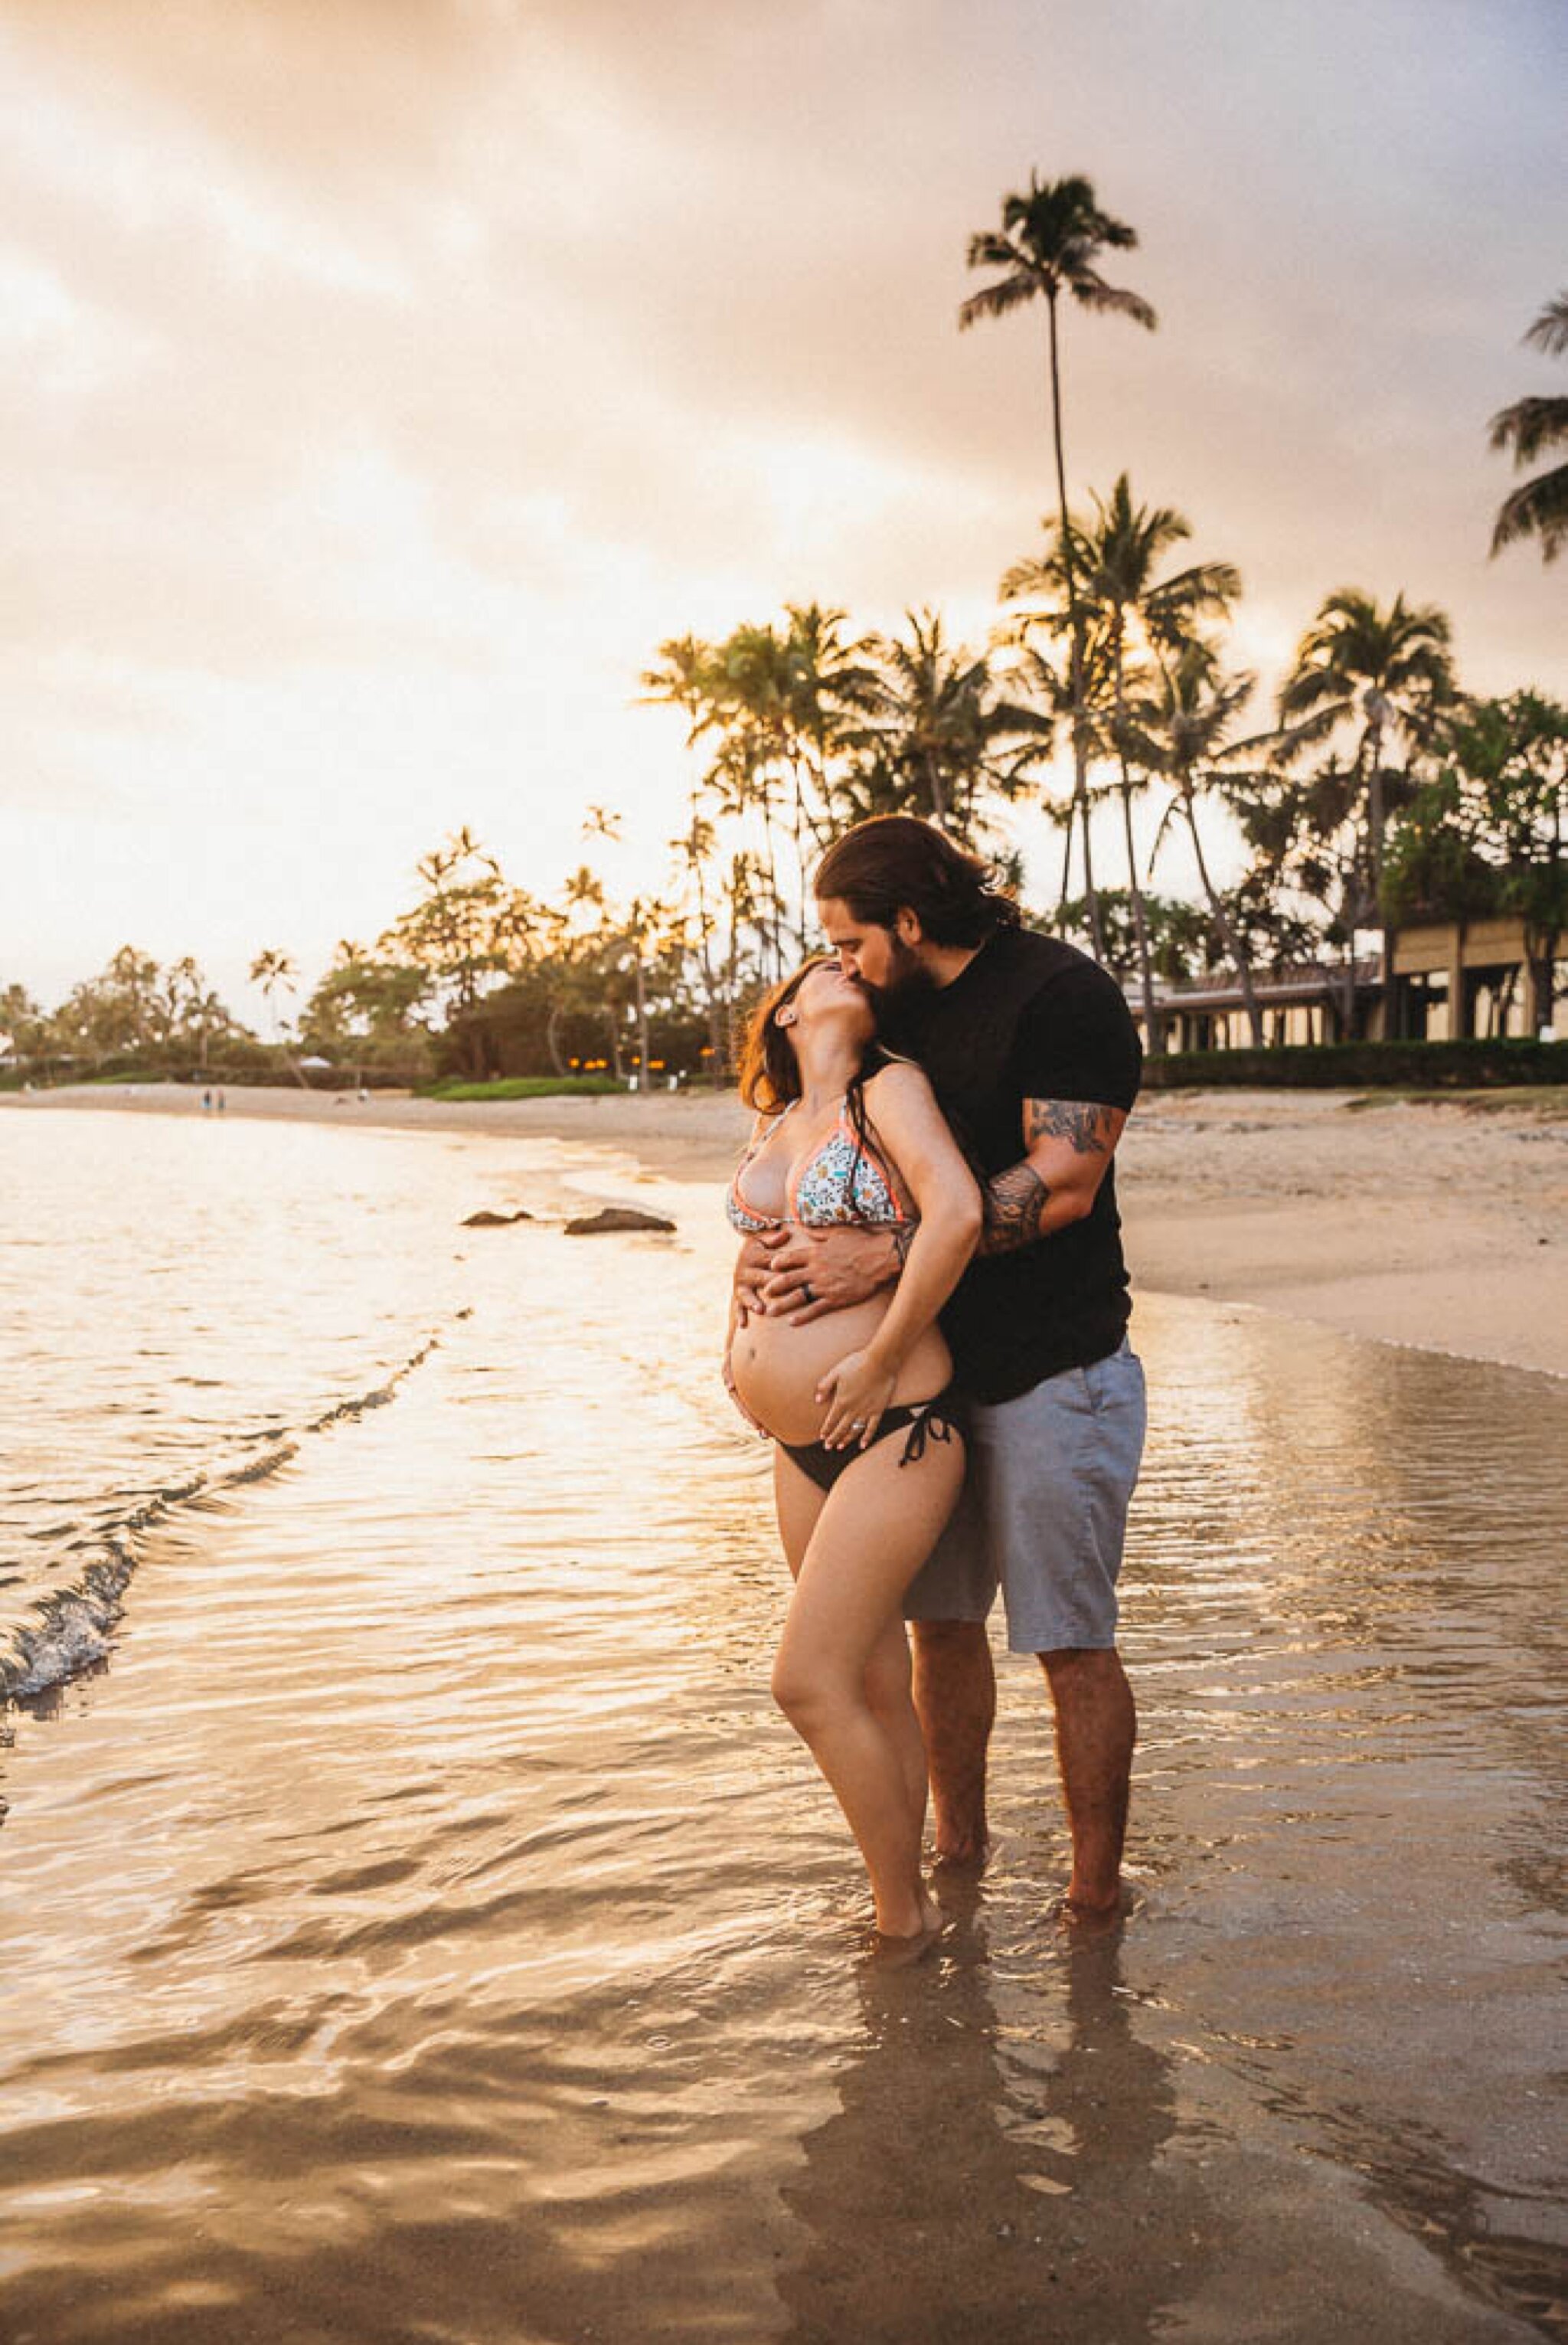 Sunset Maternity Photography Session at Kahala Beach in Oahu - Hawaii Family Photographer - Johanna Dye 31.jpg